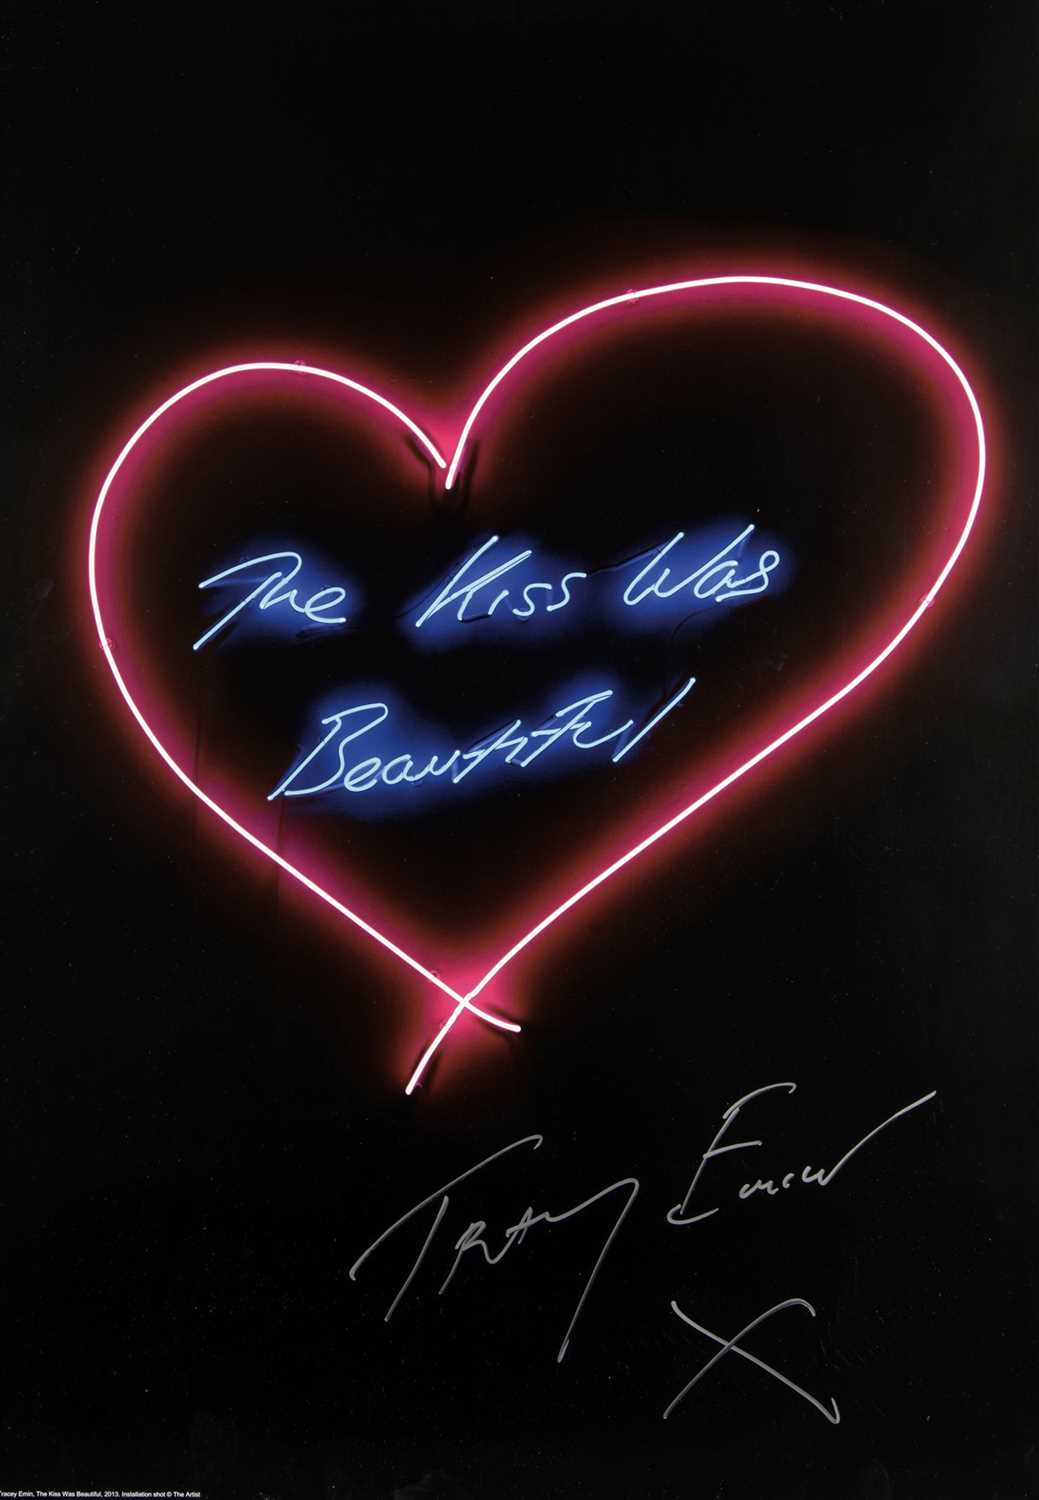 Lot 43 - Tracey Emin (British b.1963), ‘The Kiss Was Beautiful’, 2016